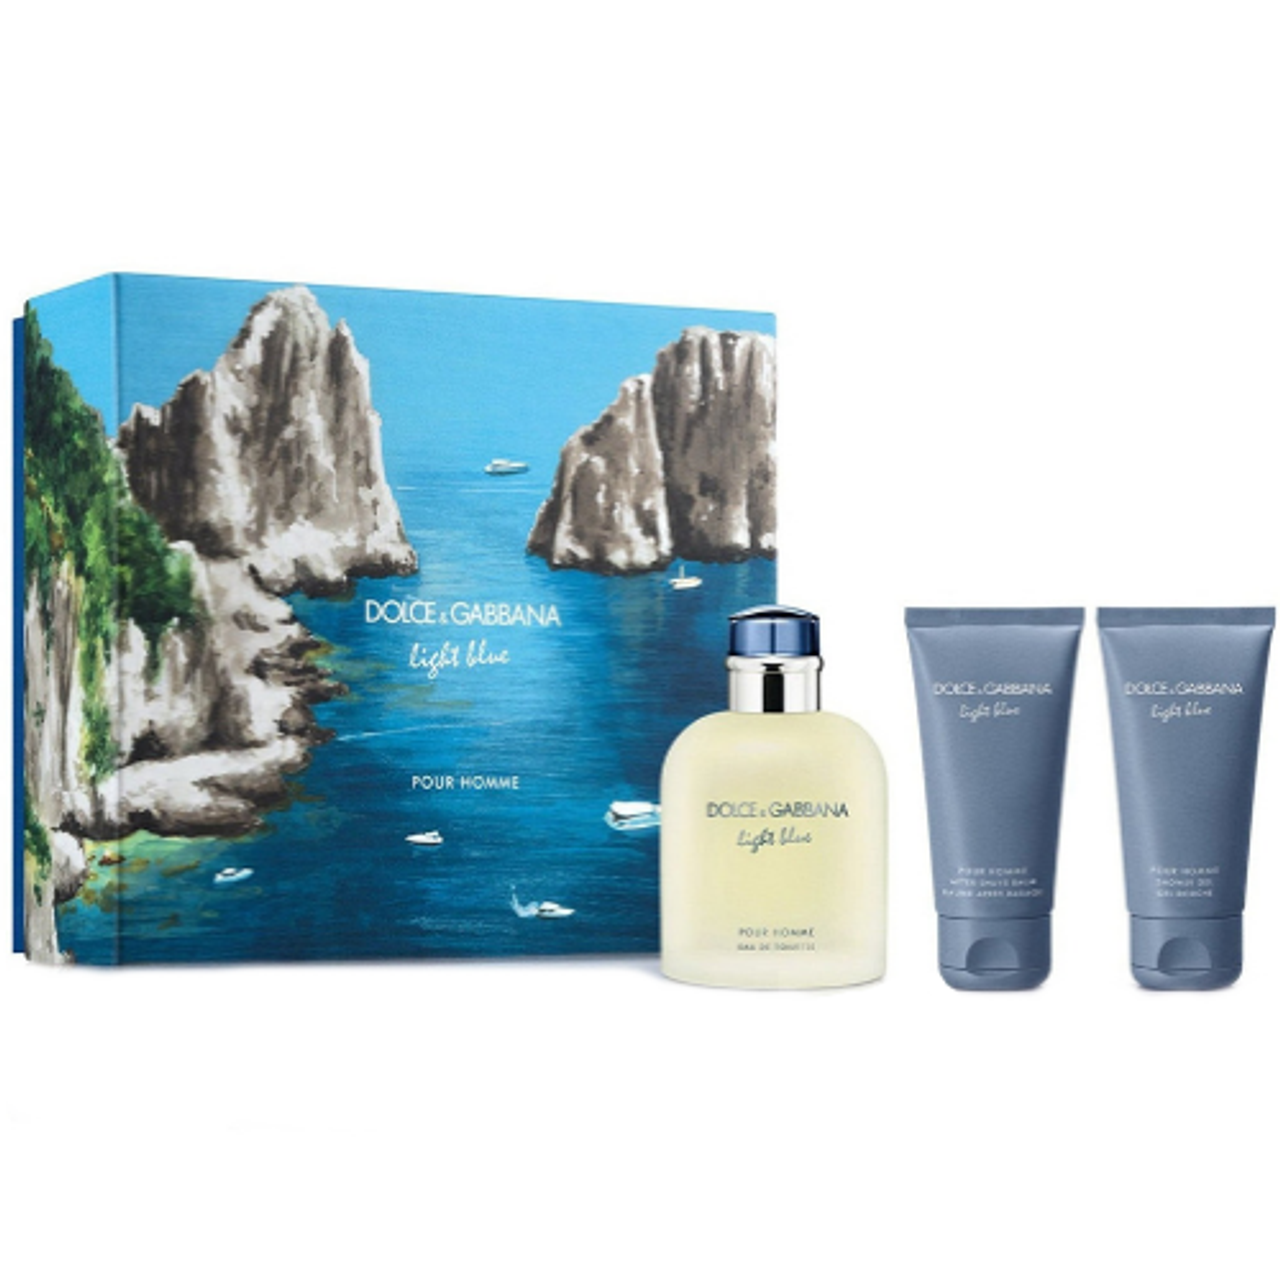 Dolce & Gabbana Men's Light Blue Intense EDP Spray 3.38 oz (Tester)  Fragrances 3423473032892 - Fragrances & Beauty, Light Blue Eau Intense -  Jomashop